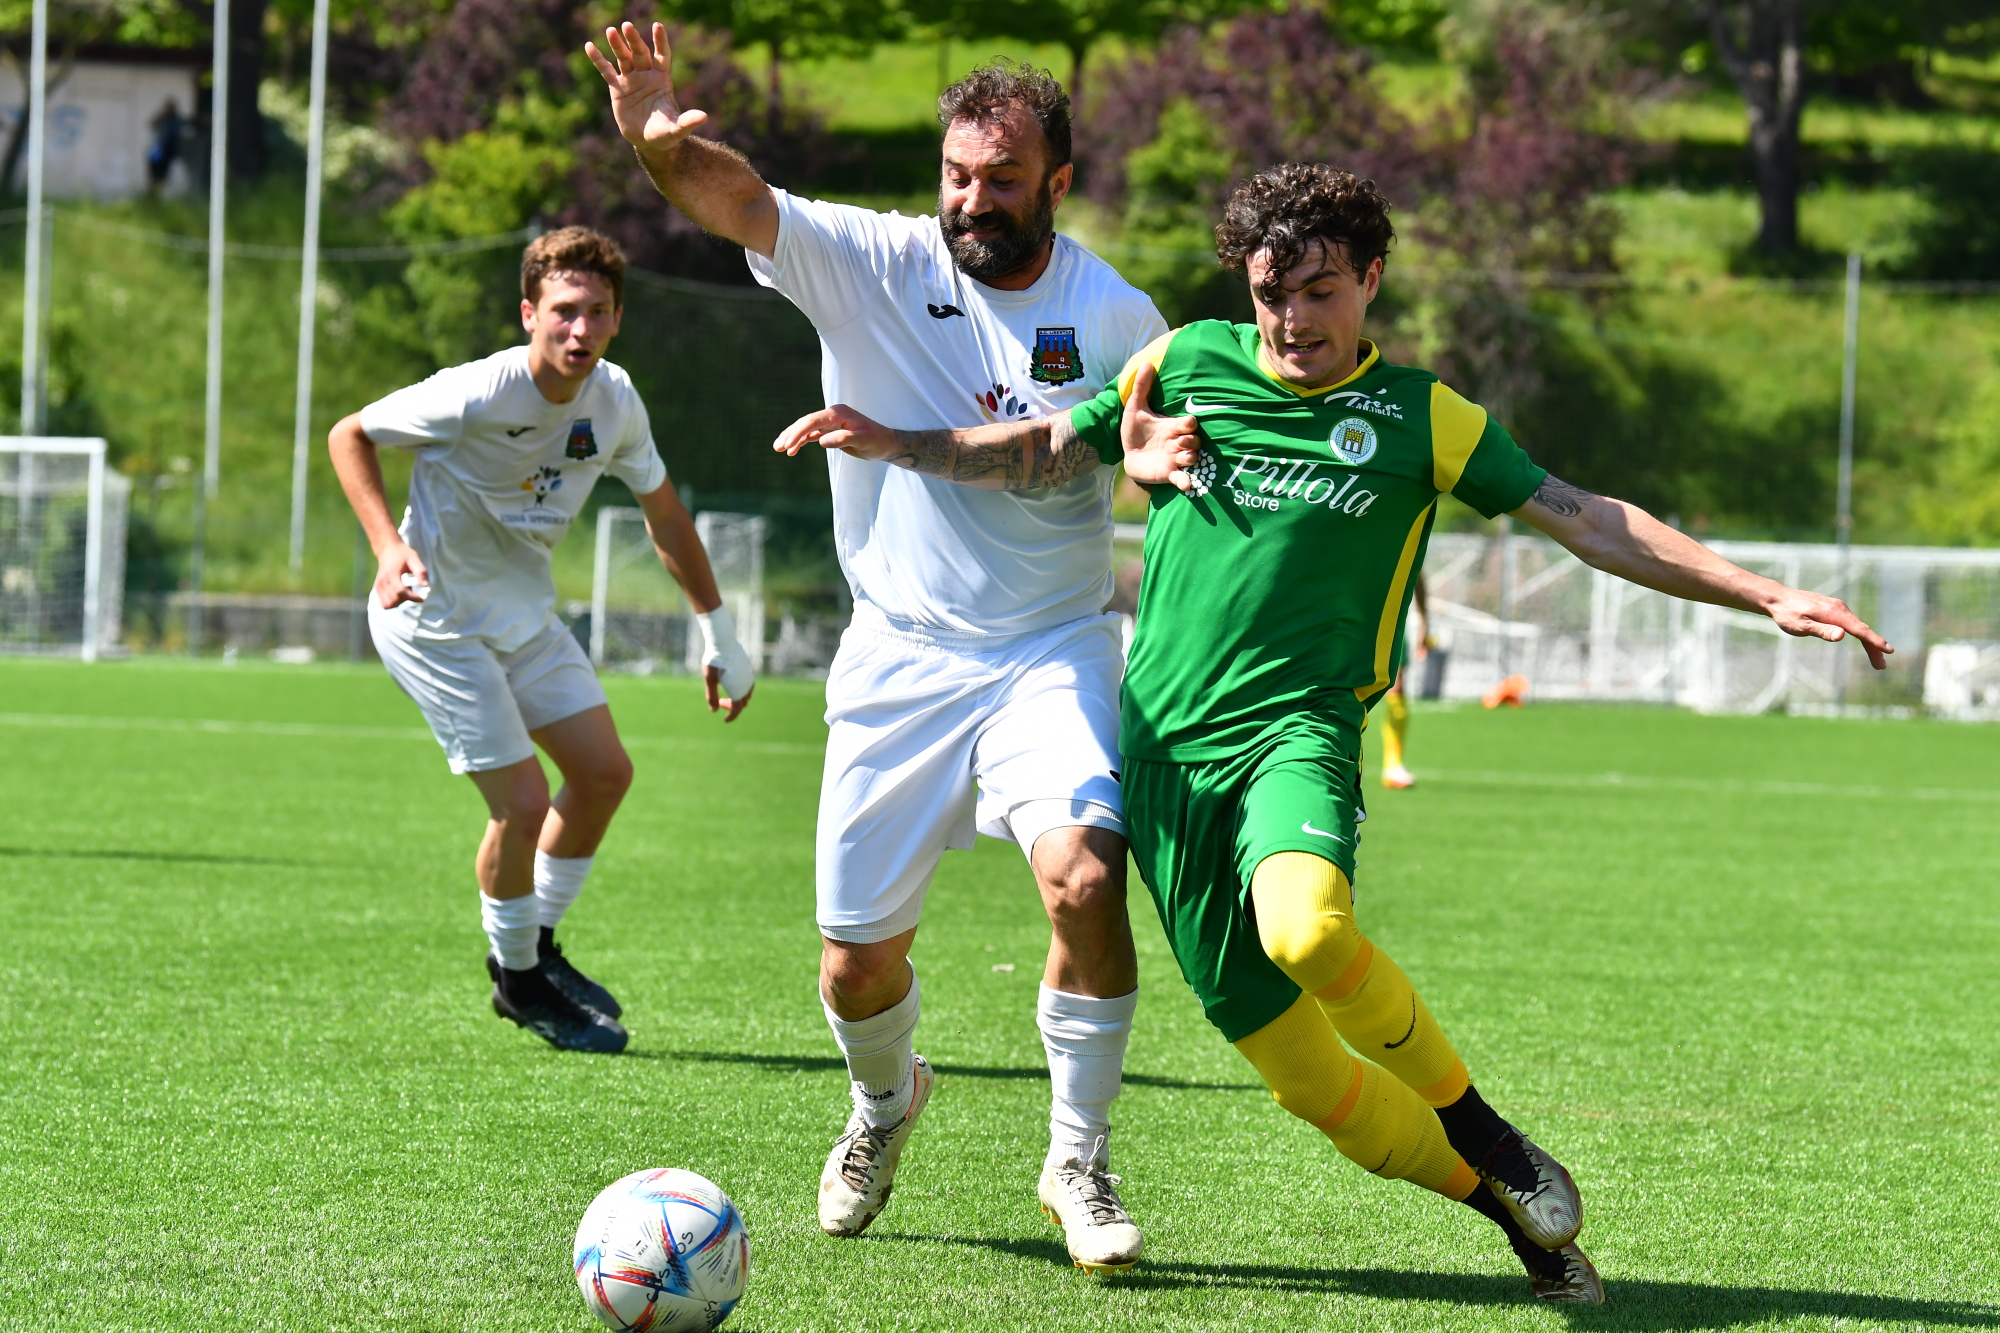 Andata semifinale playoff campionato calcio San Marino, Cosmos-Libertas 2-0